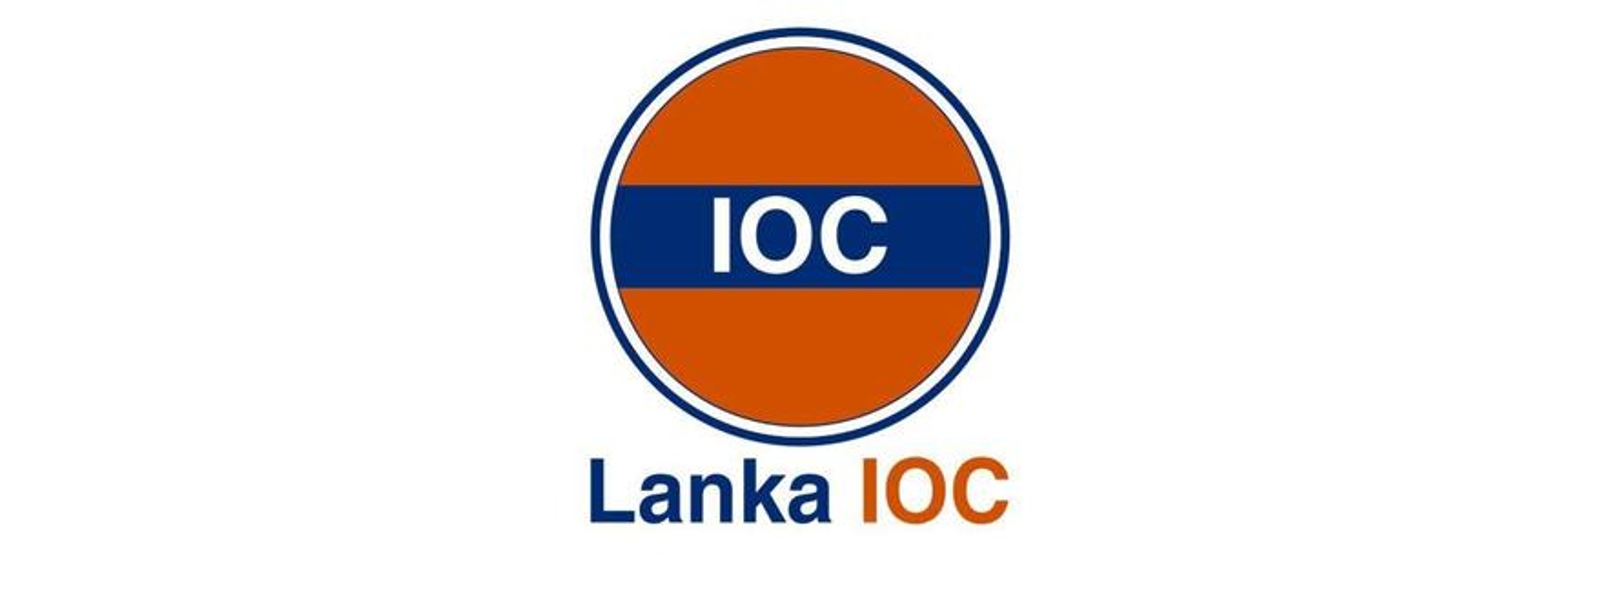 Lanka IOC increases fuel prices, again